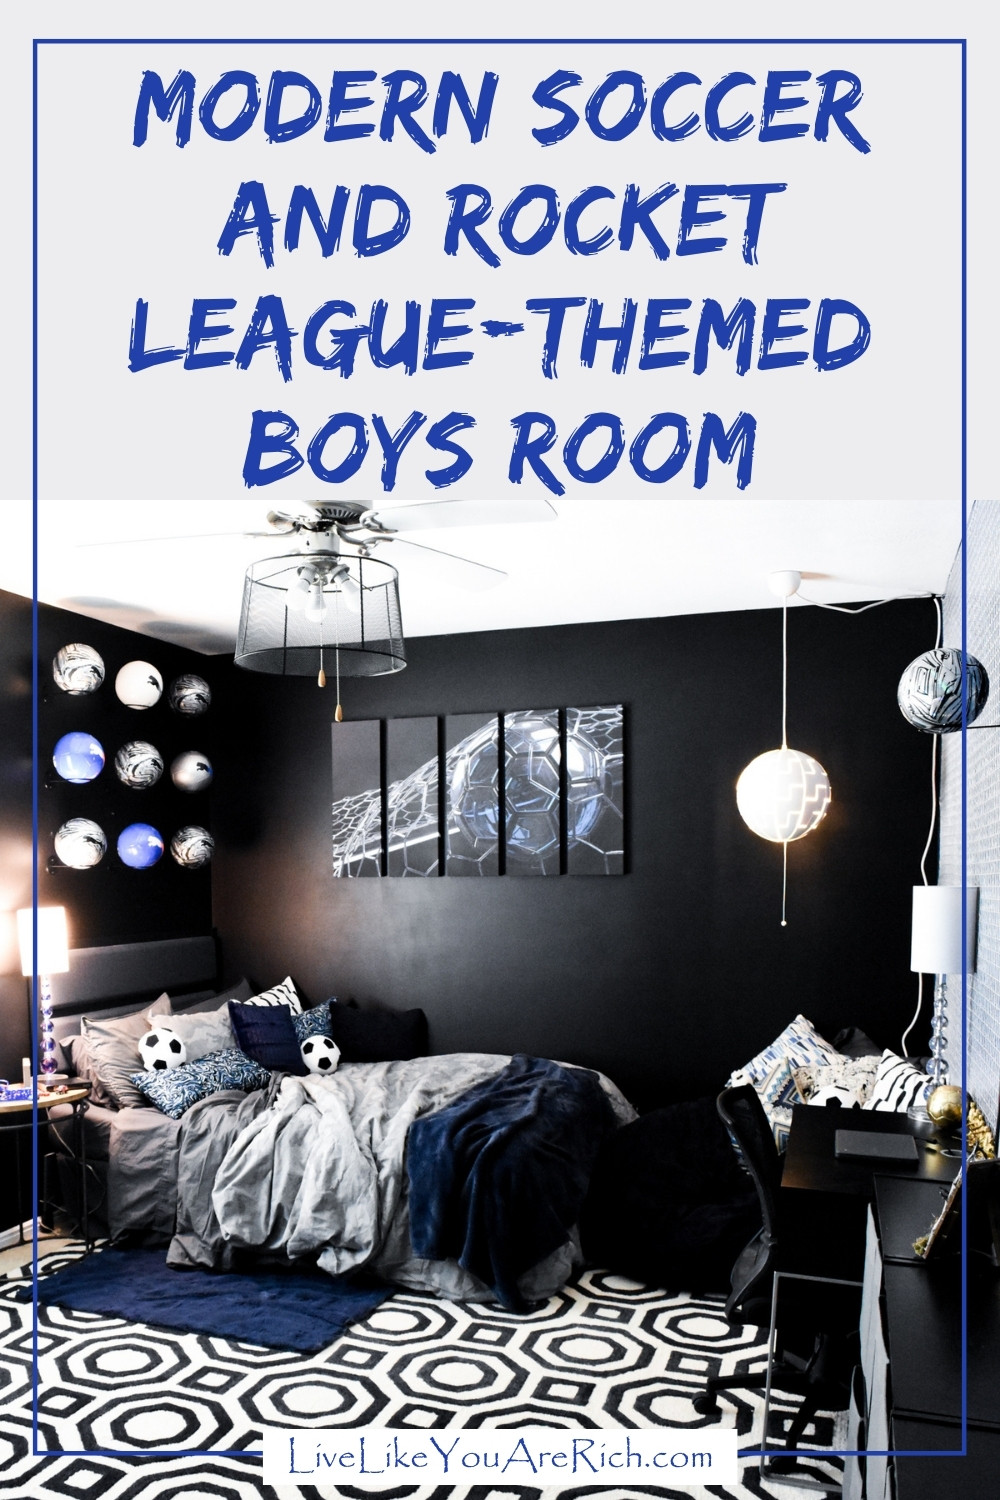 Modern Soccer and Rocket League-Themed Boys Room